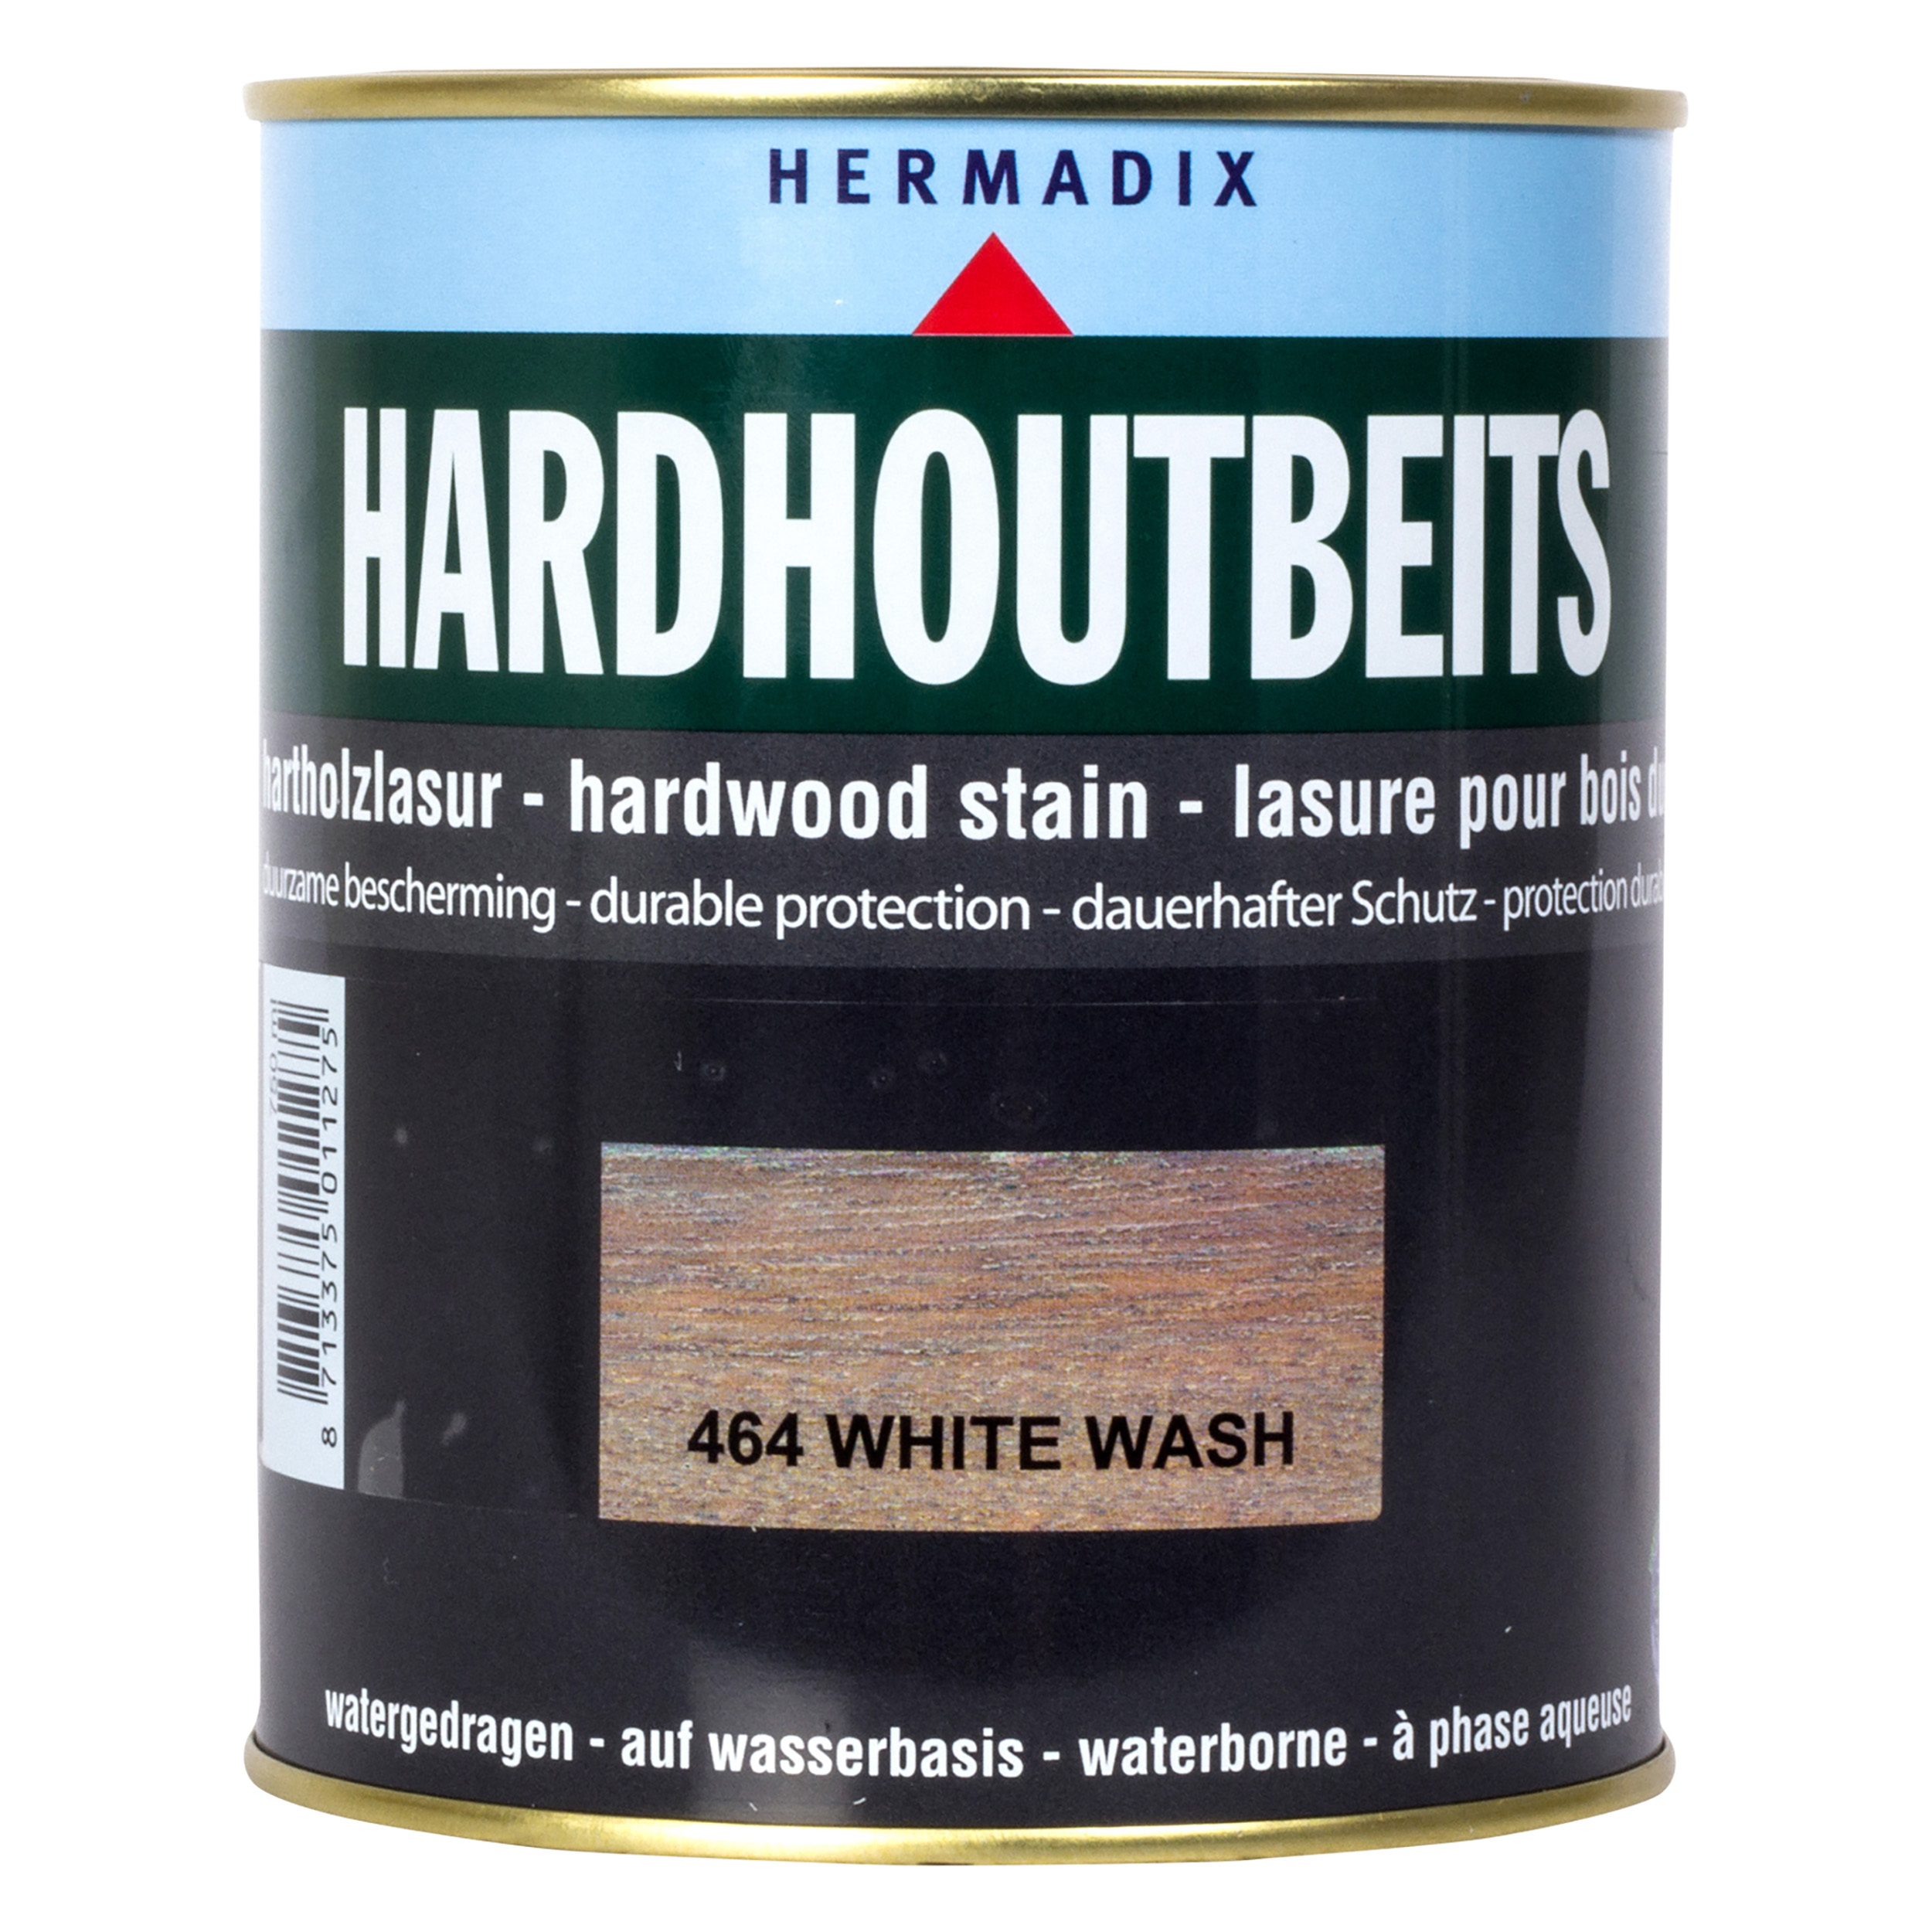 25.846.41 Hermadix  hardhoutbeits zijdeglans - 750 ml - white wash 464)